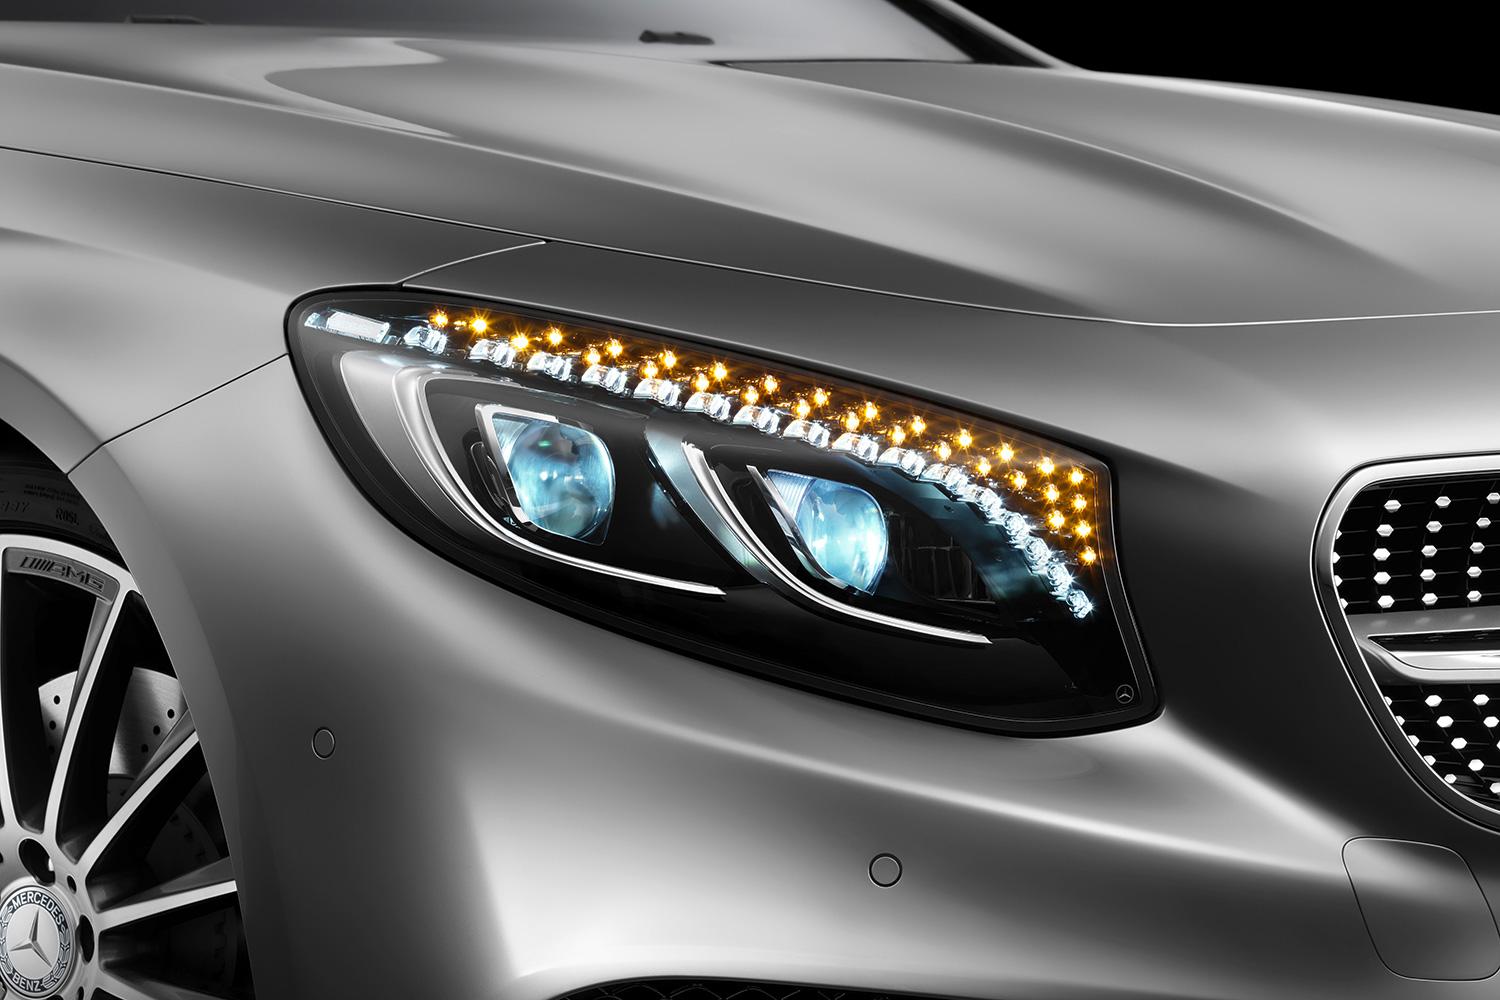 2015 Mercedes S Class Coupe headlight